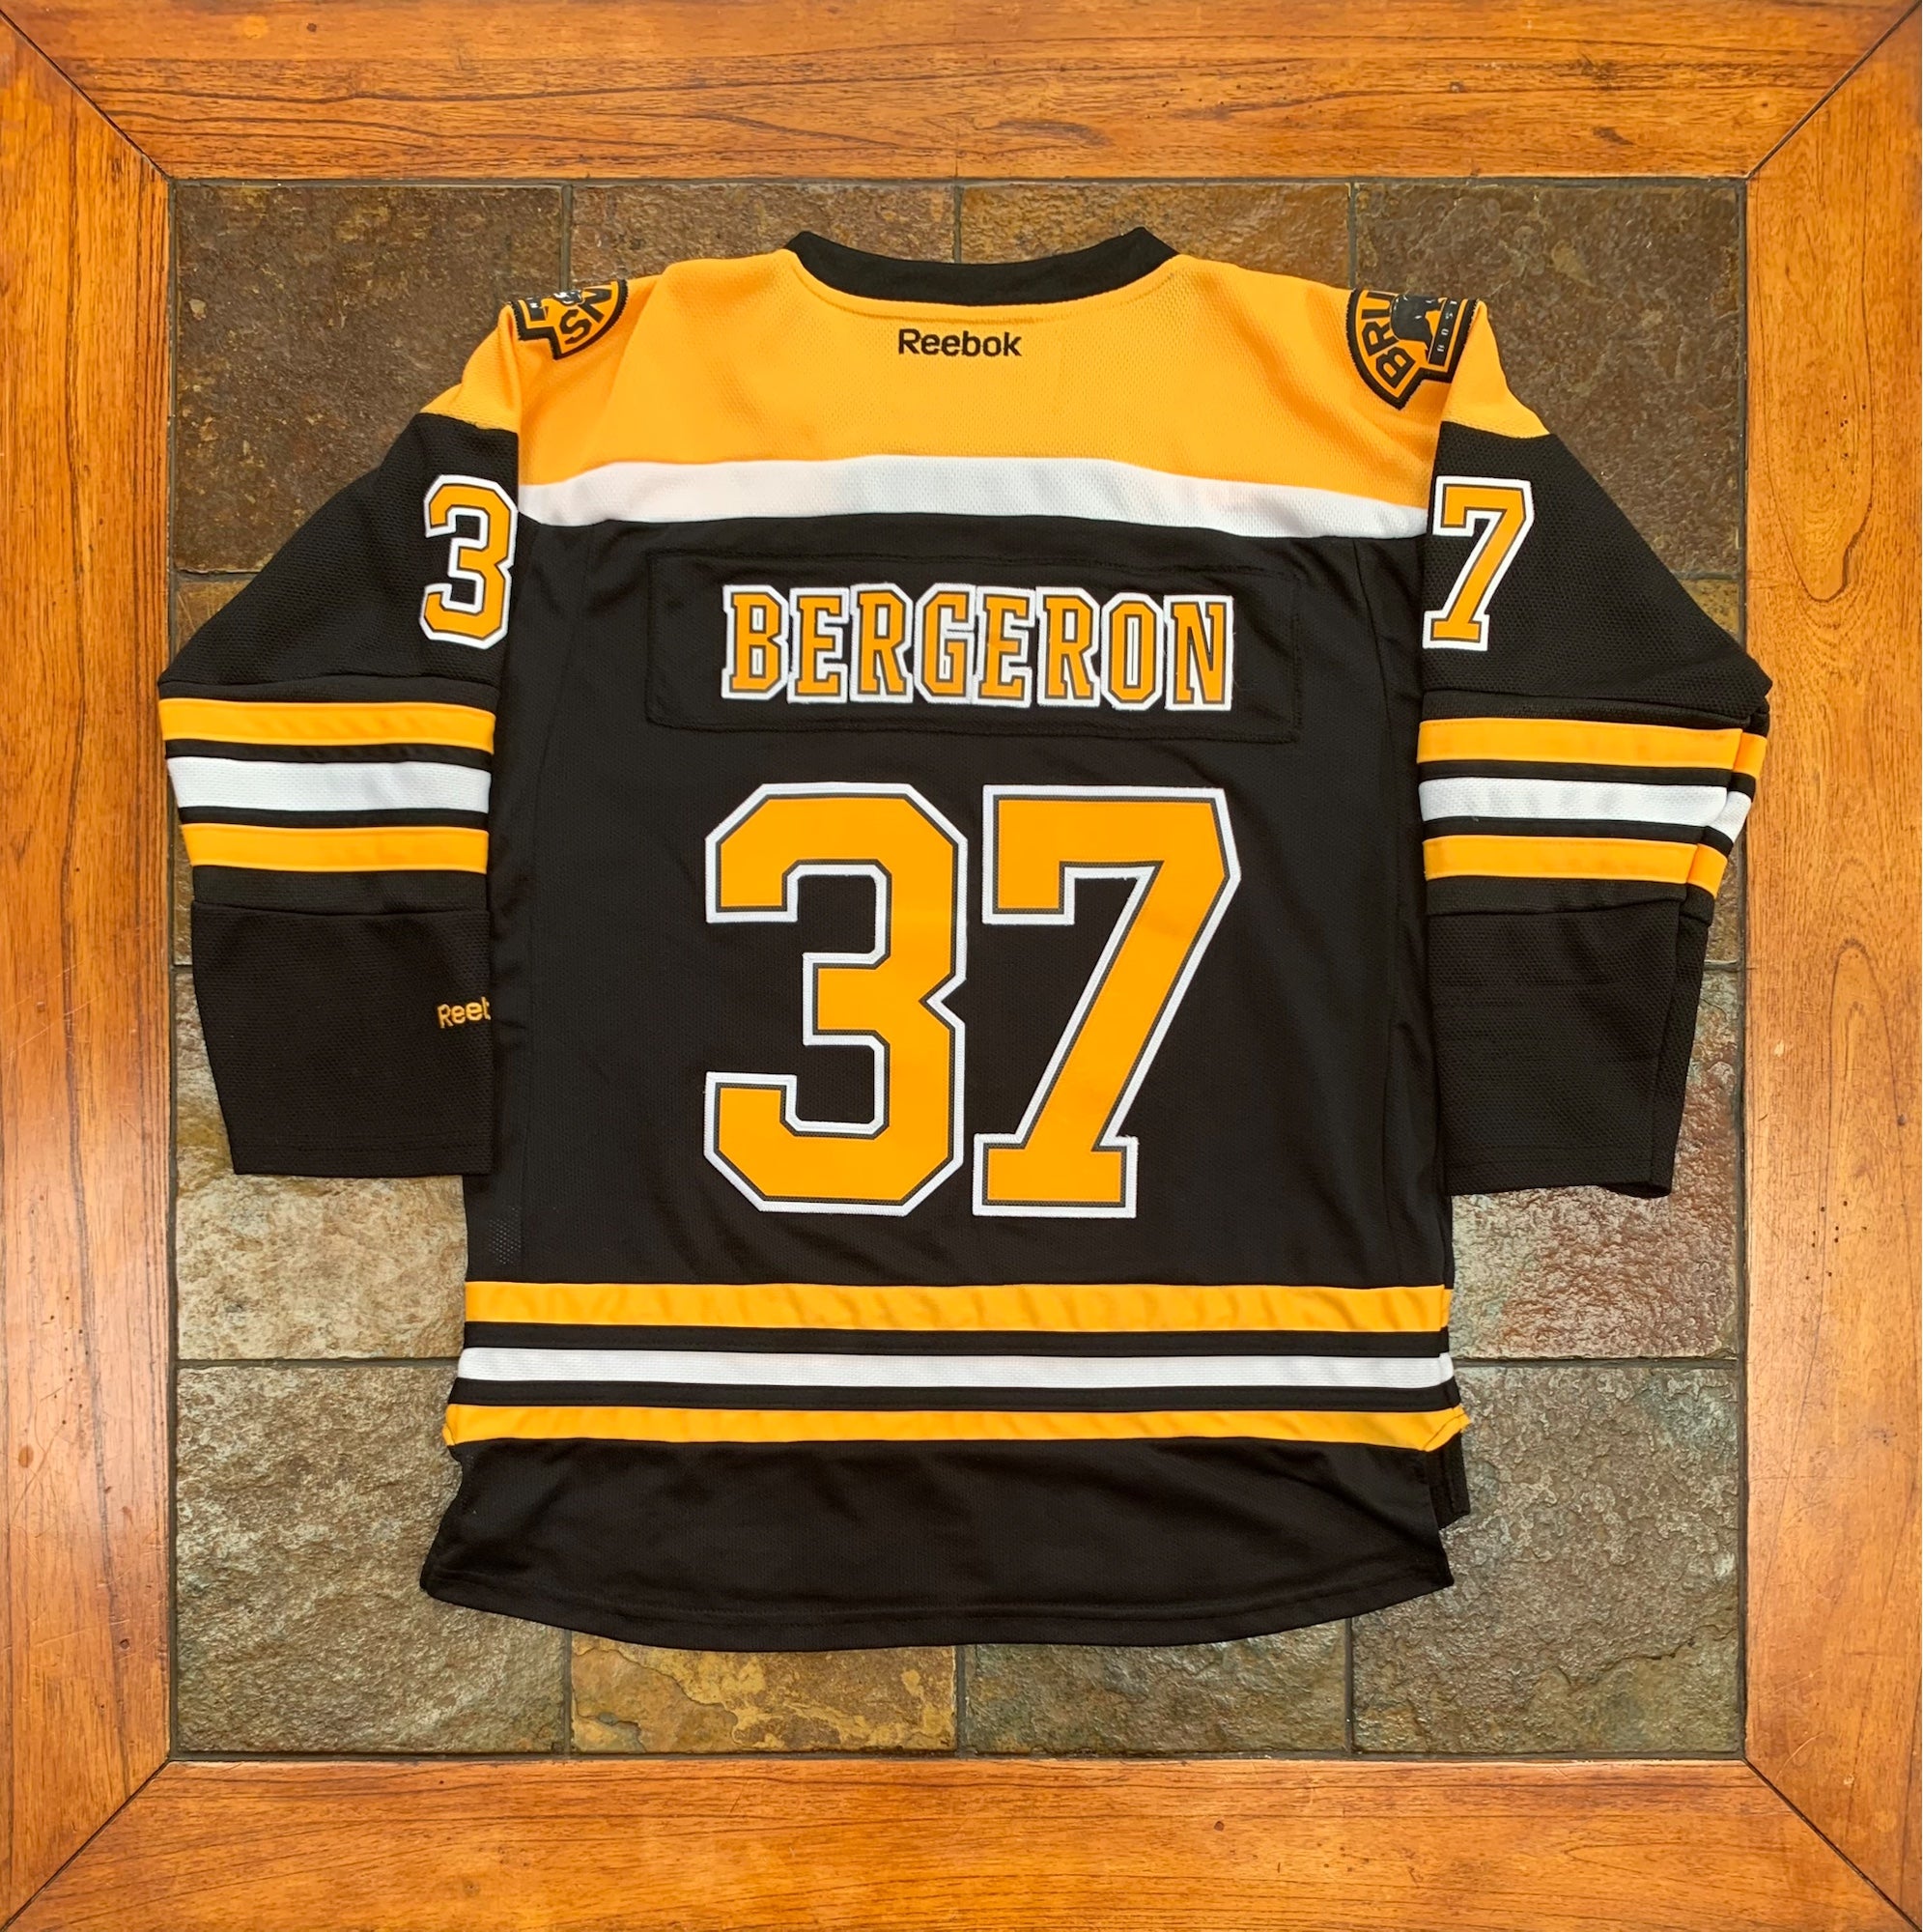 Reebok BOSTON BRUINS (Size Youth LG/XL) Hockey 3RD Jersey PATRICE BERGERON